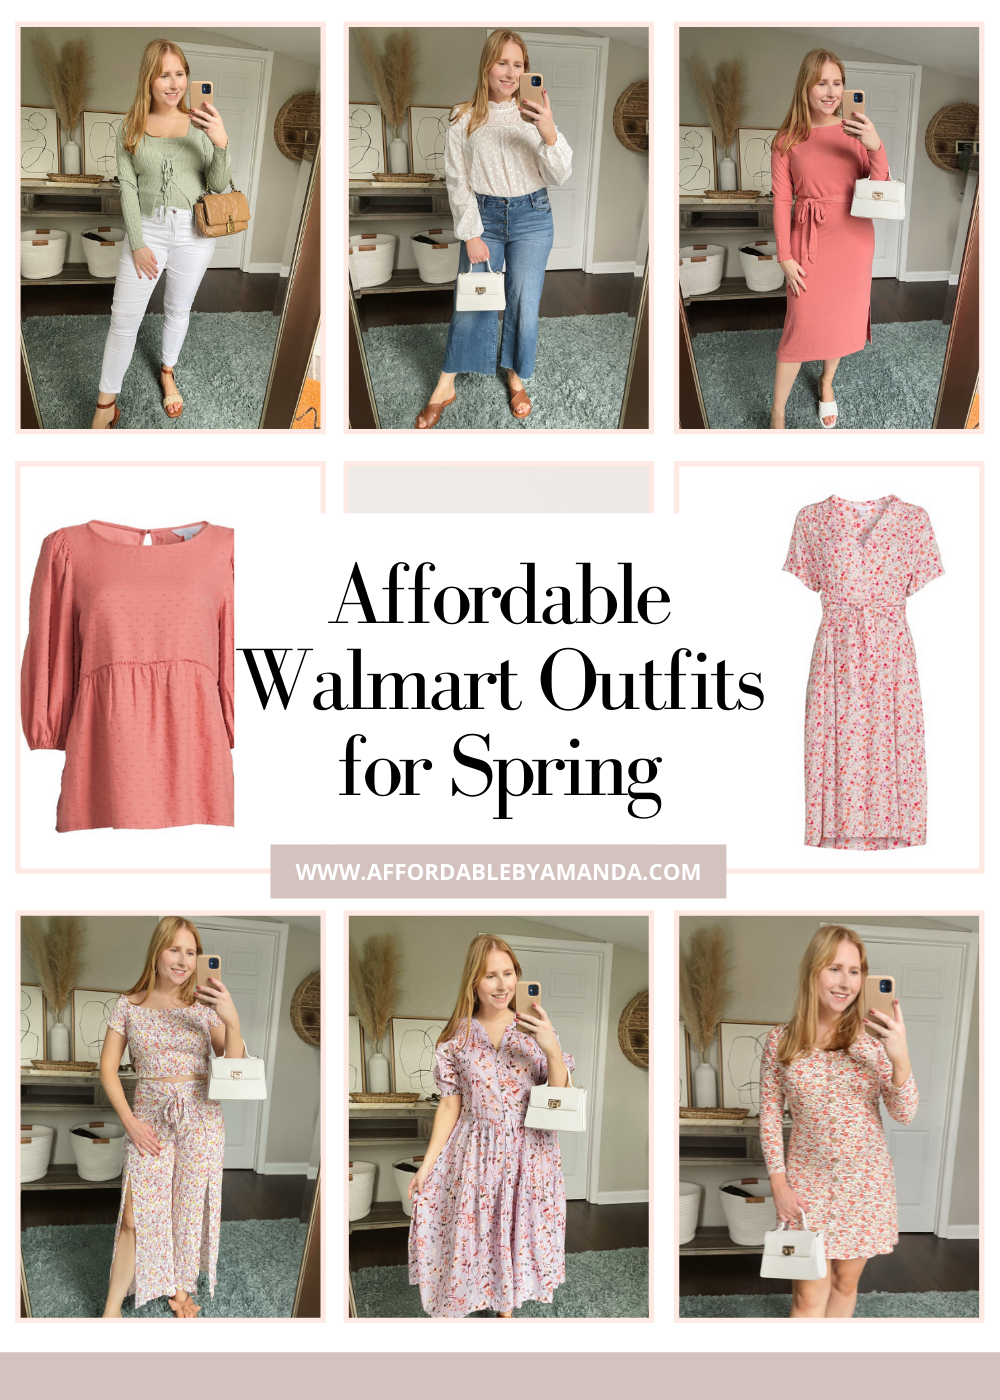 Affordable Walmart Outfits for Spring 2022 - www.affordablebyamanda.com - Affordable by Amanda